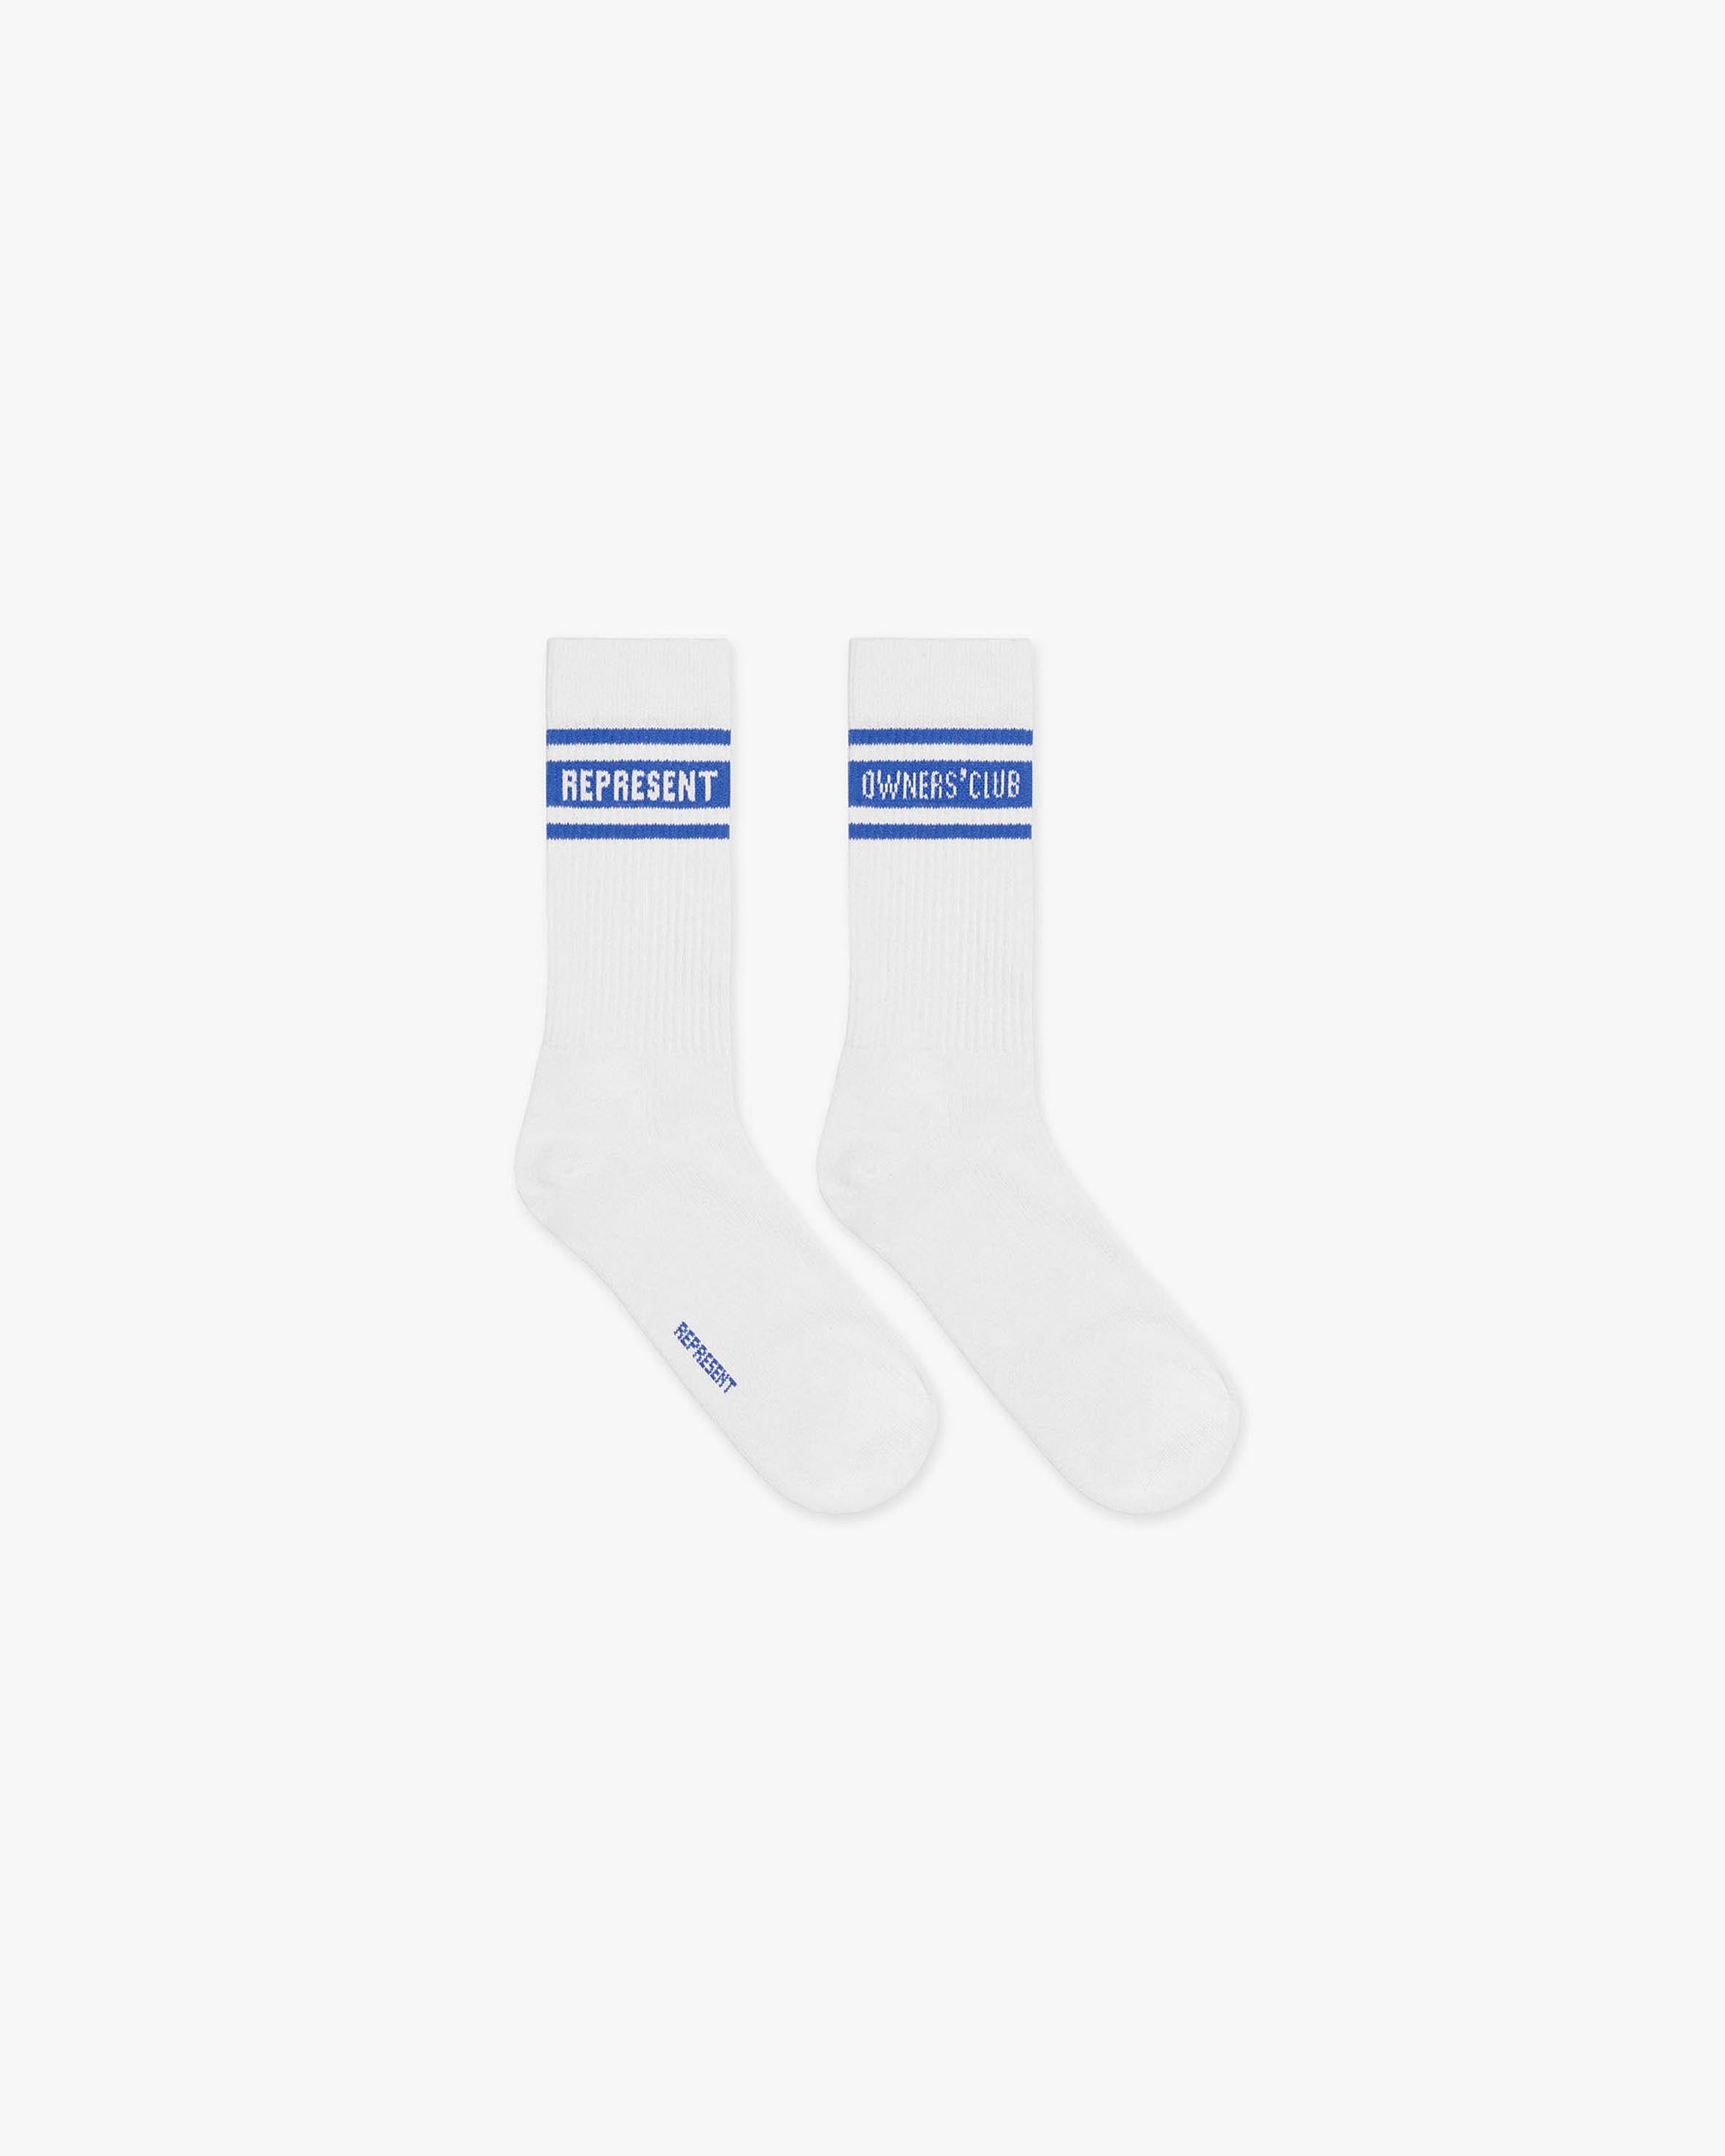 Represent Owners Club Socks - Flat White/Cobalt